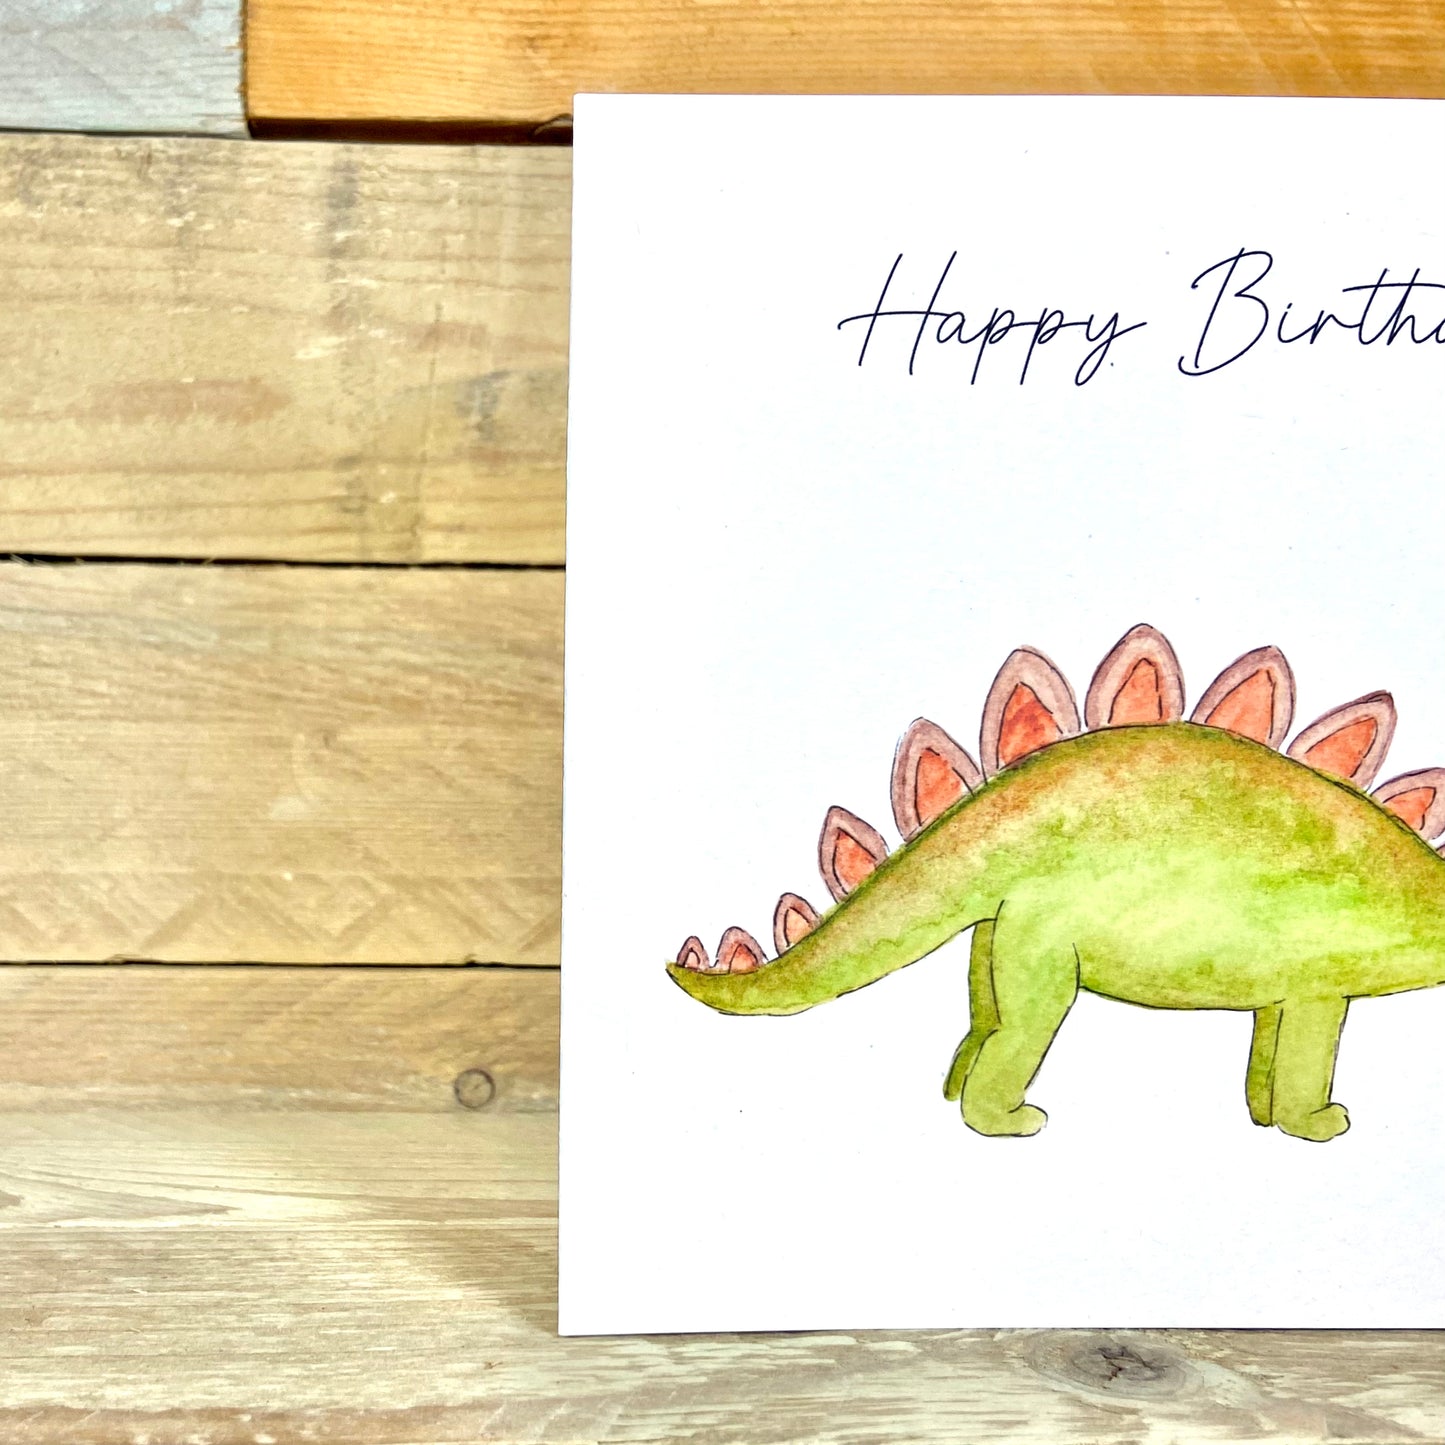 Dylan the Stegosaurus Birthday Card